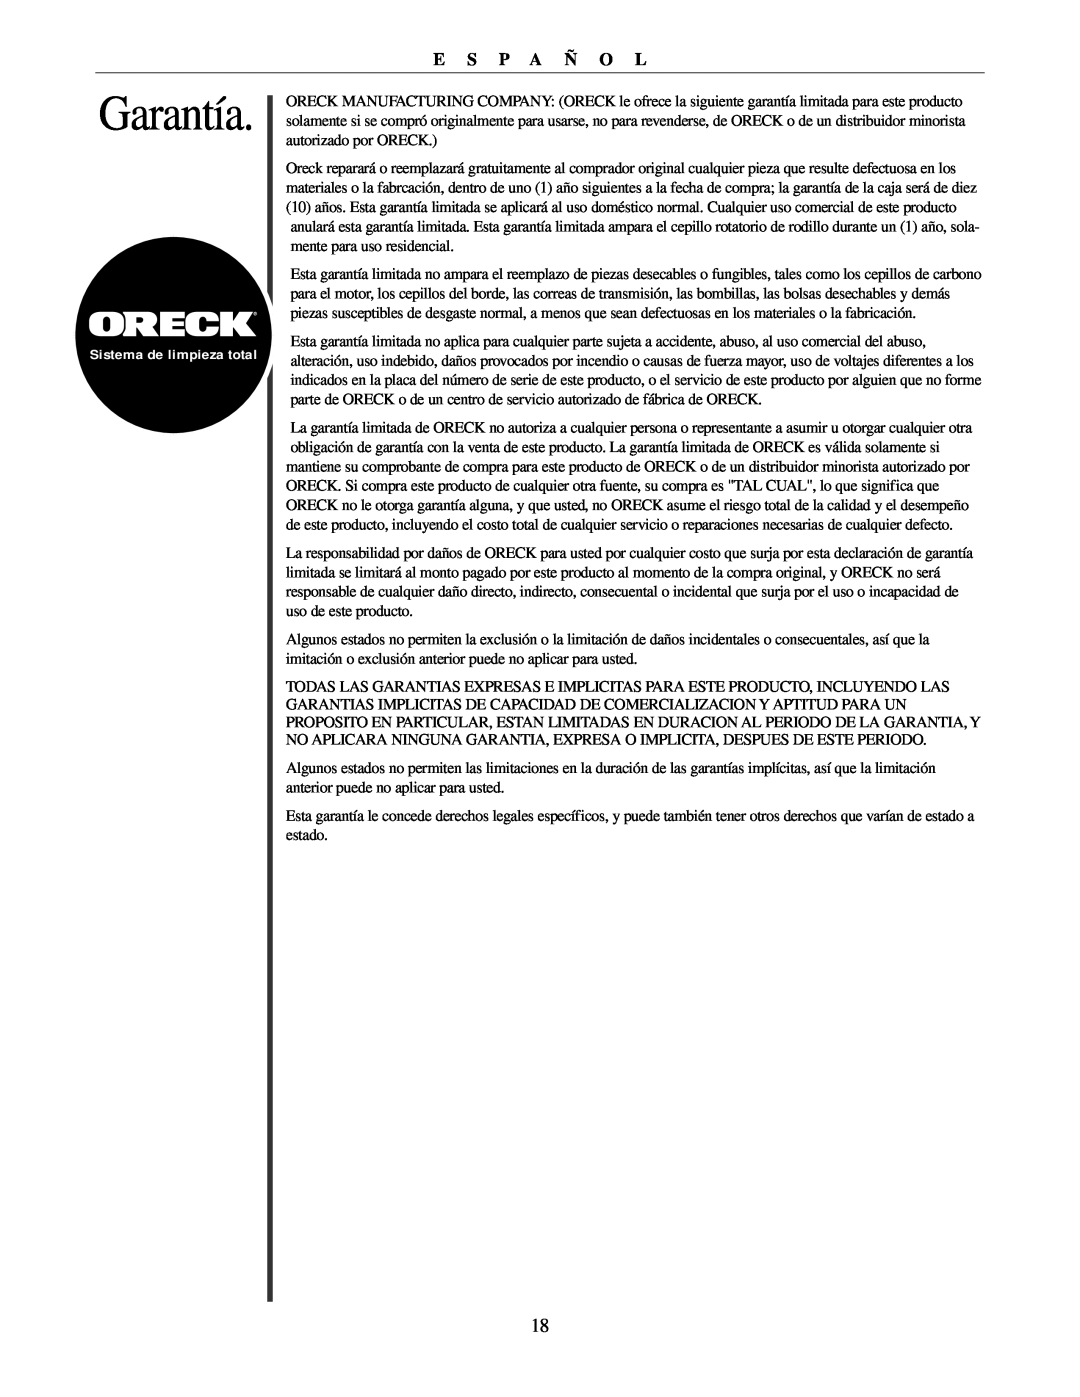 Oreck U2251 manual Garantía, E S P A Ñ O L 